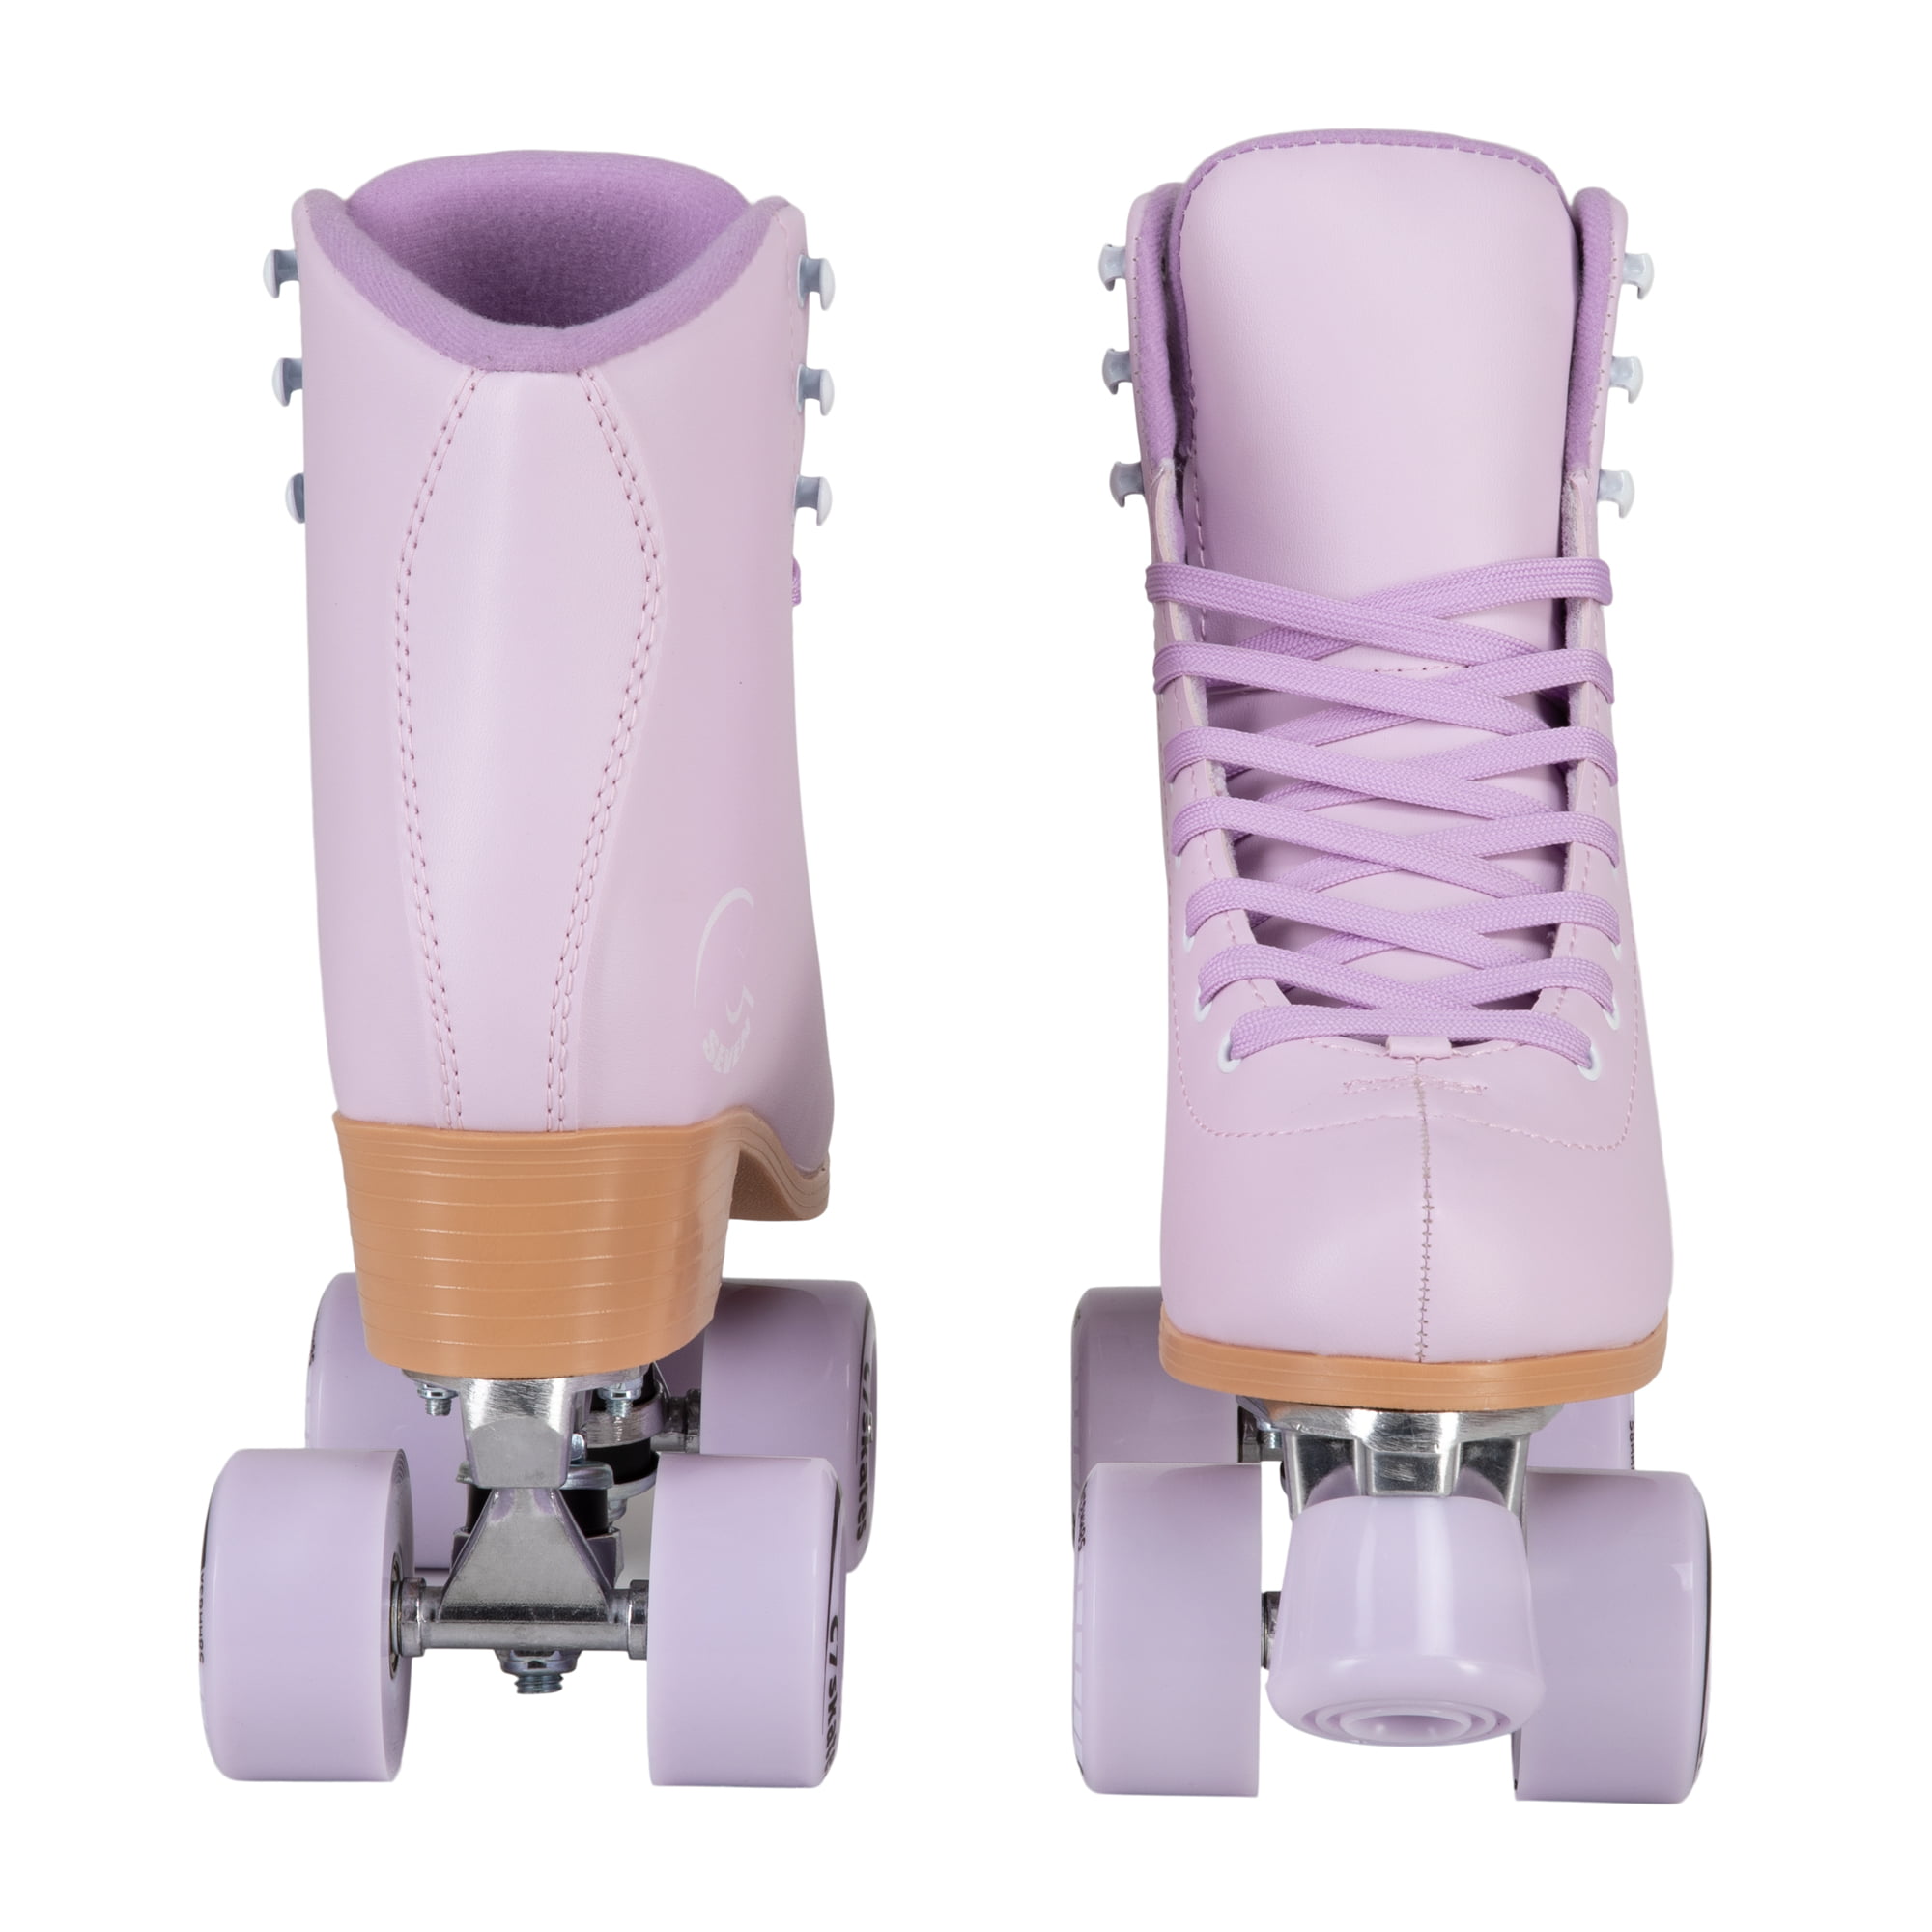 Details about   Sure Grip Replacement Double Action Purple Cushions Set of 8 Quads Roller Skates 